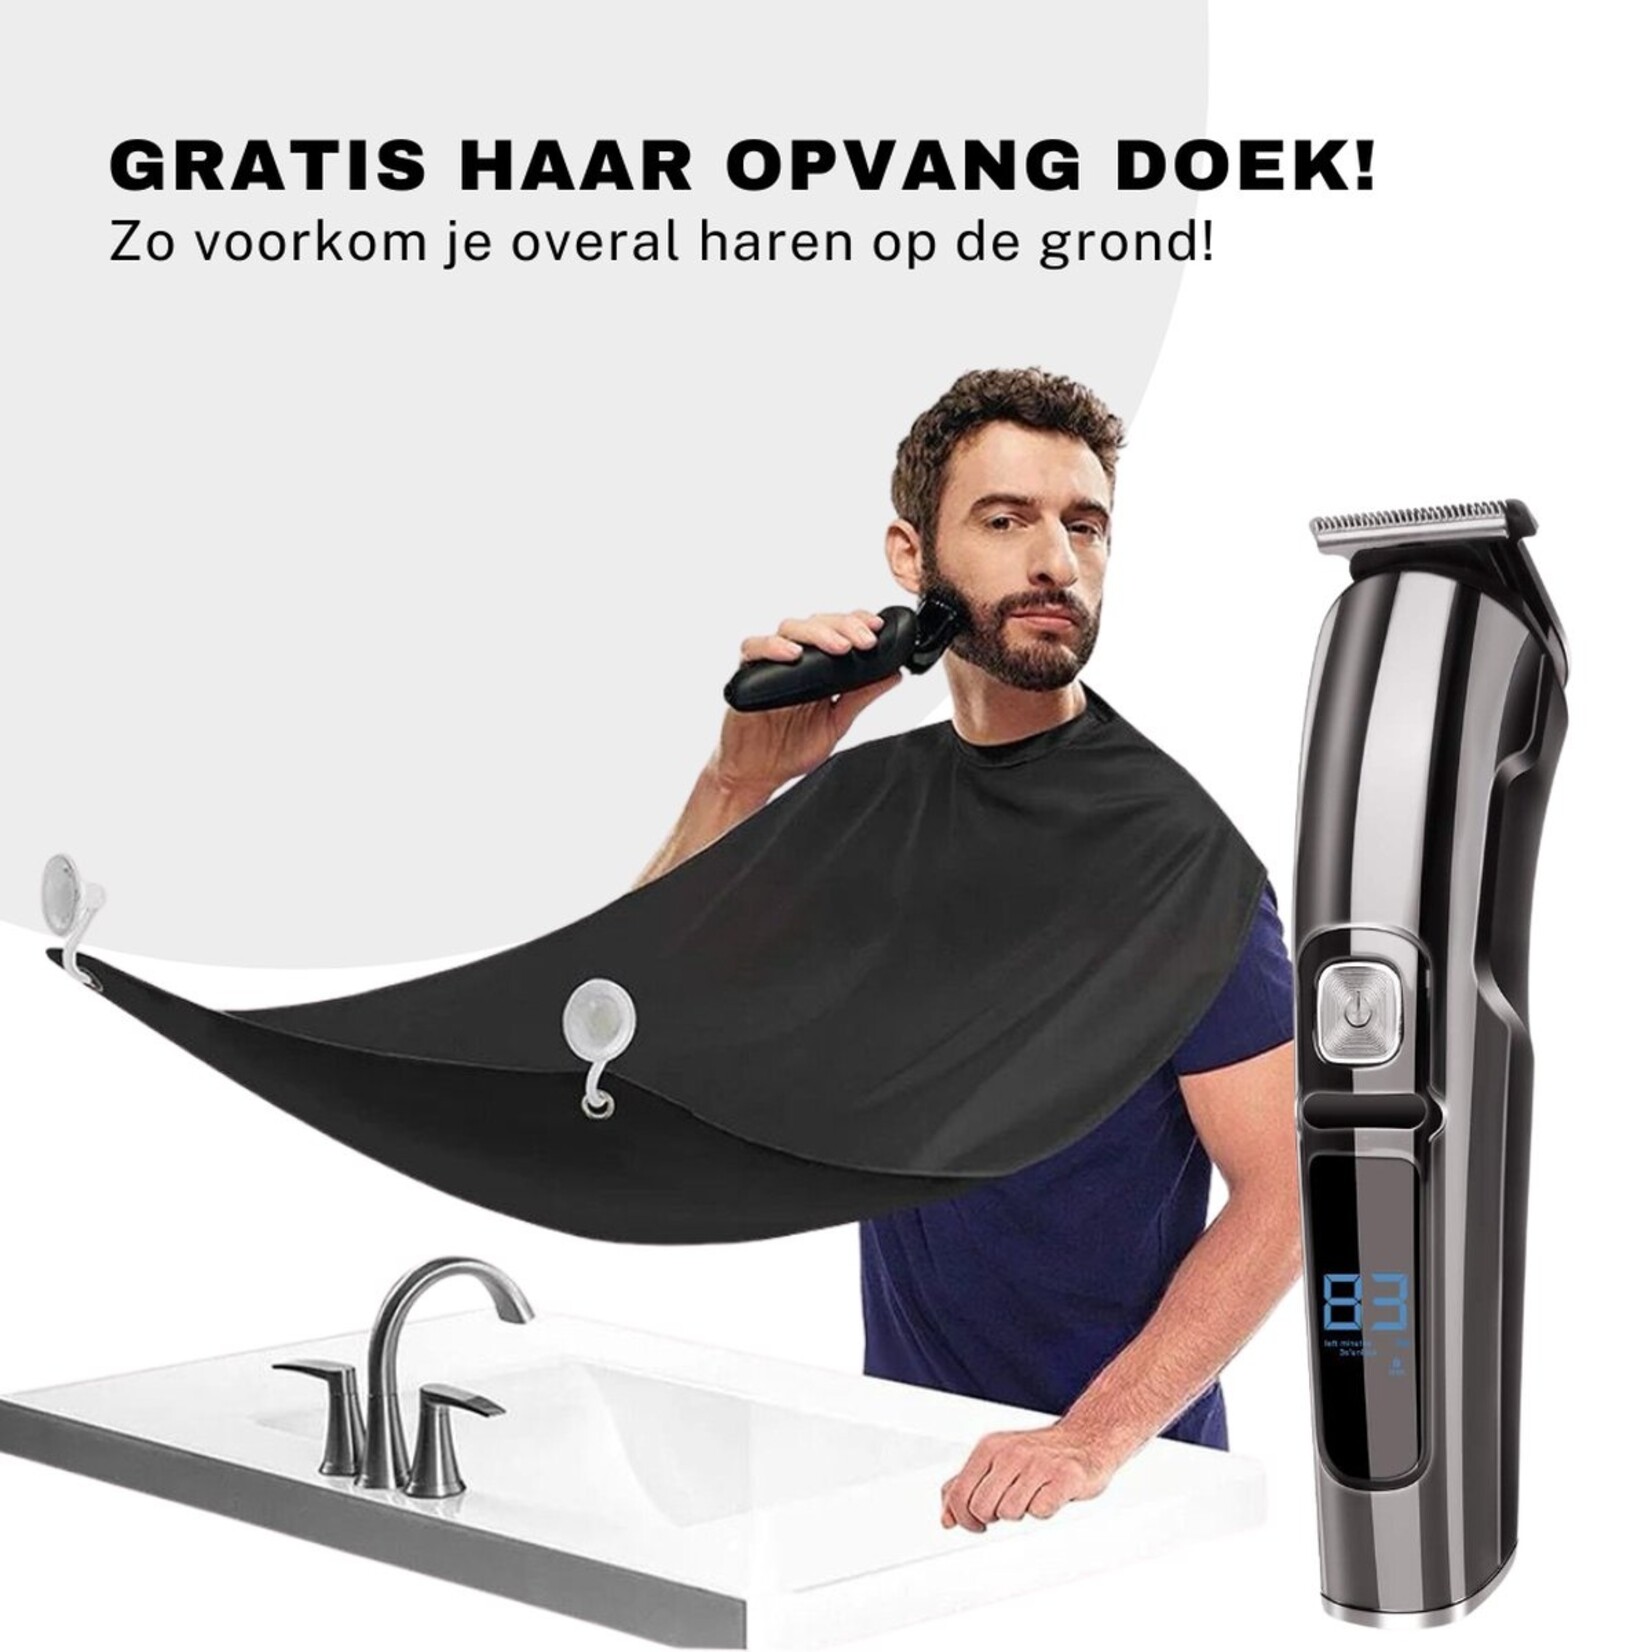 MHZ Professional clippers - Bodygroomer - Men - Beard trimmer - Black trimmer